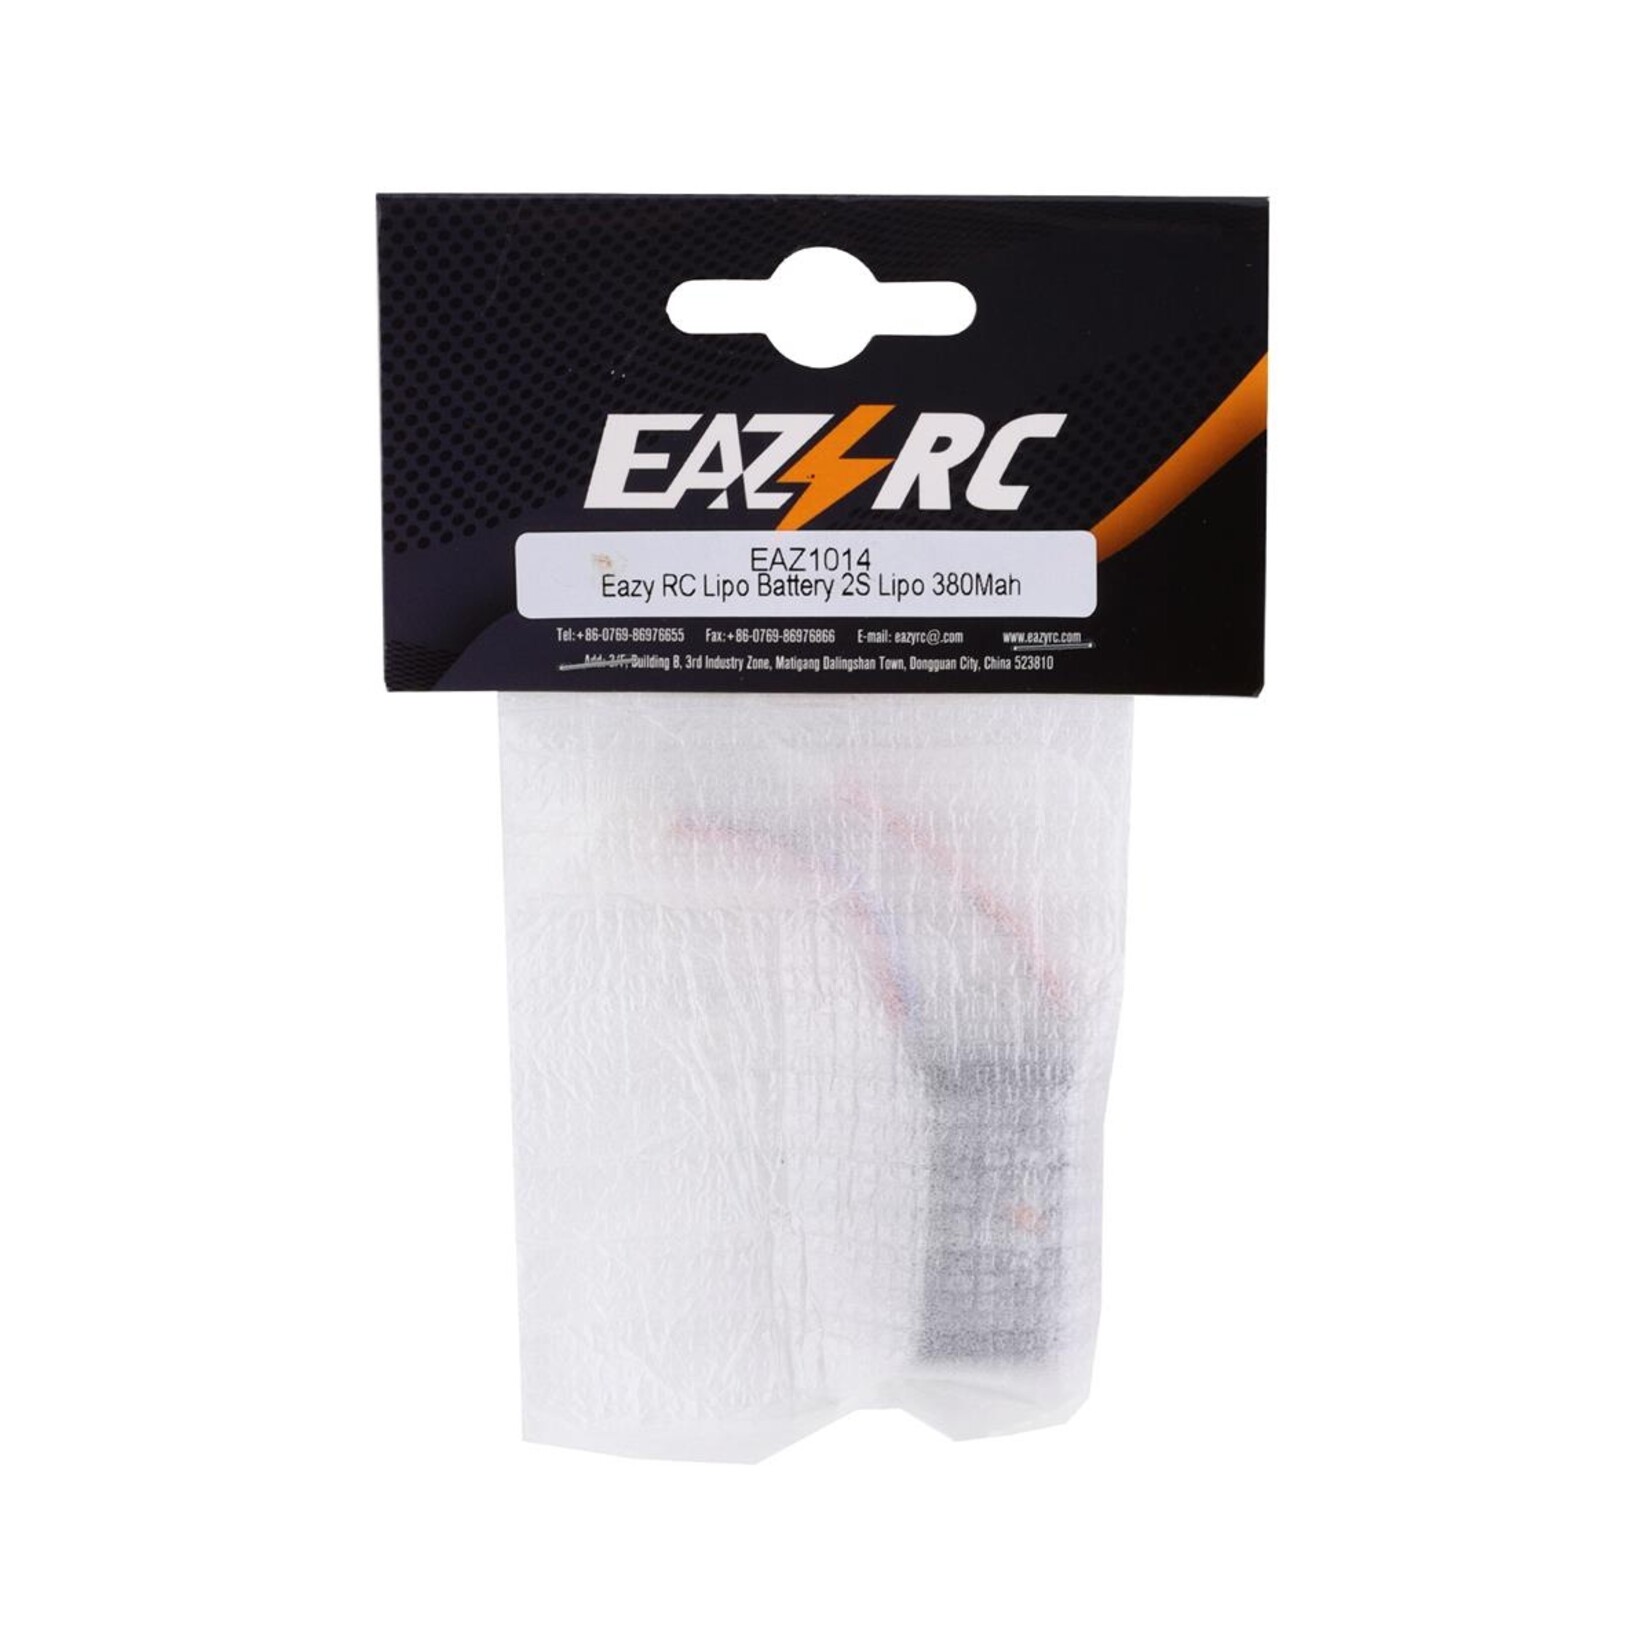 Eazy RC Eazy RC 2S LiPo Battery (7.4V/380mAh)  #EAZ1014